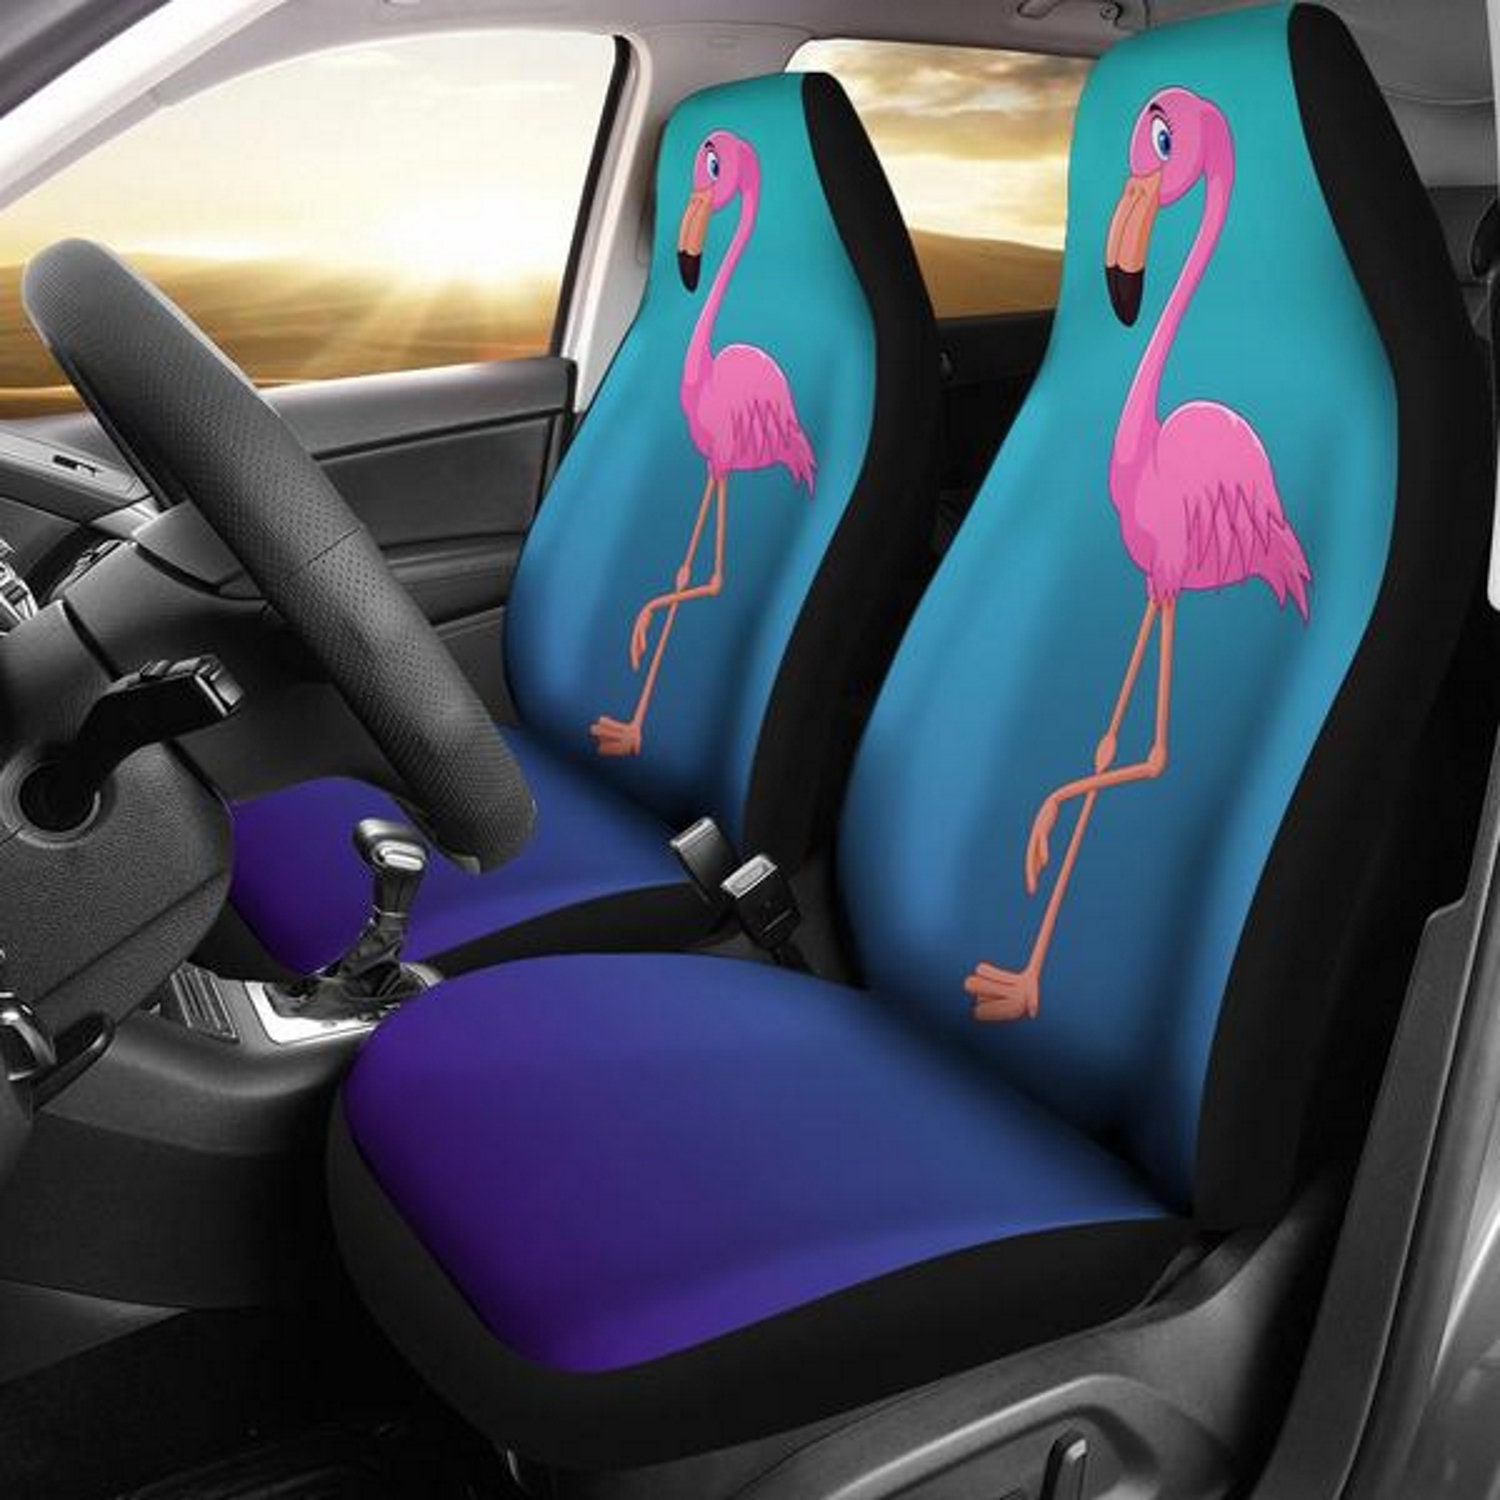 Pink Flamingo Car Seat Covers